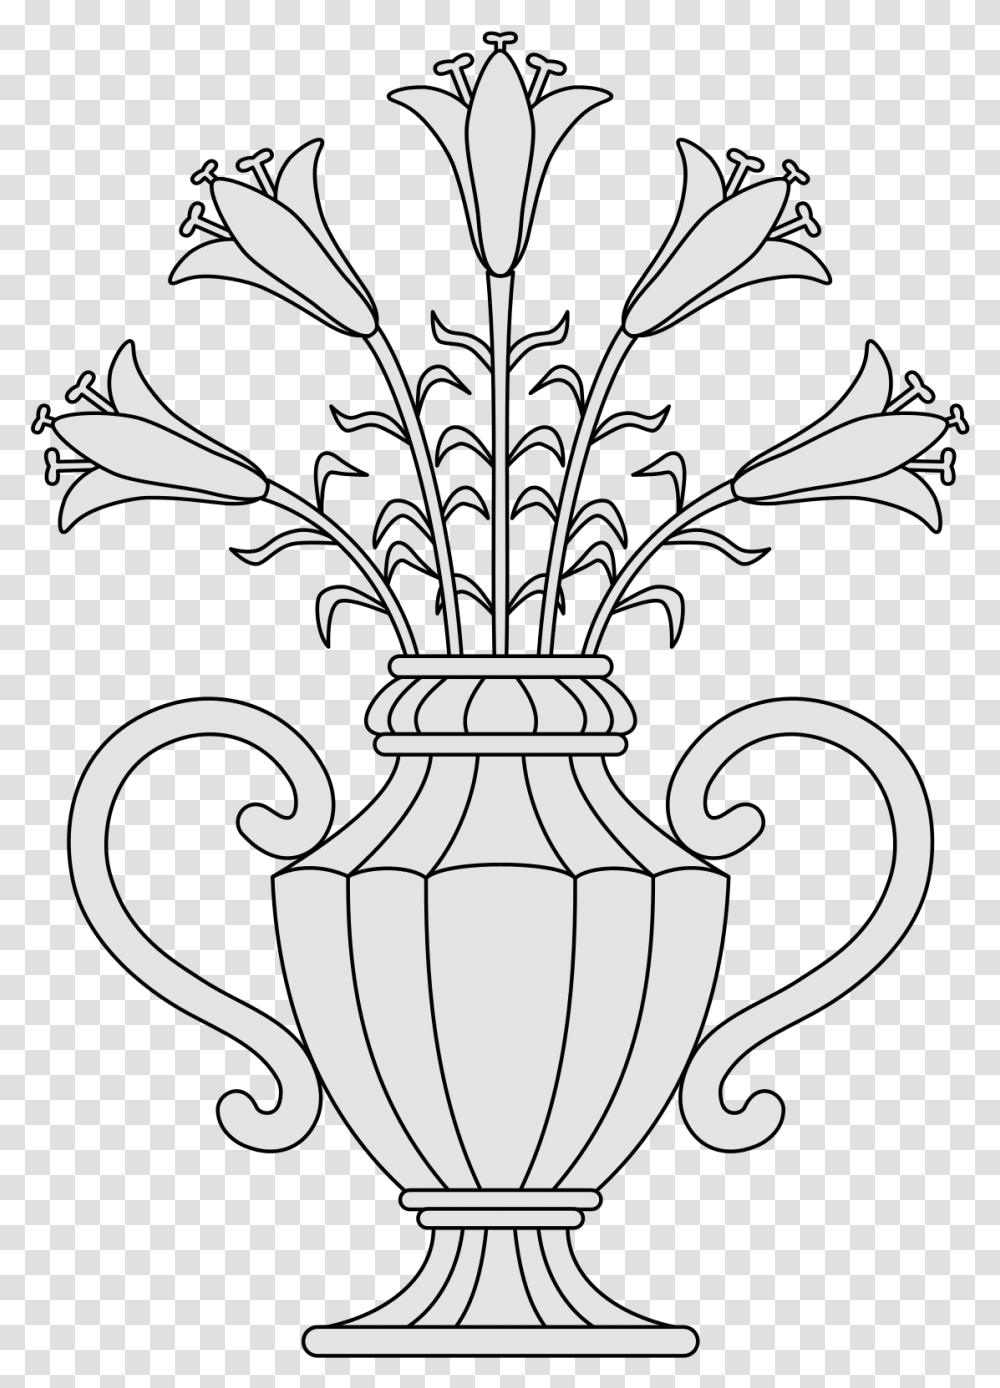 Filelilies Vasesheraldrysvg Wikimedia Commons Line Art, Jar, Pottery, Urn, Potted Plant Transparent Png